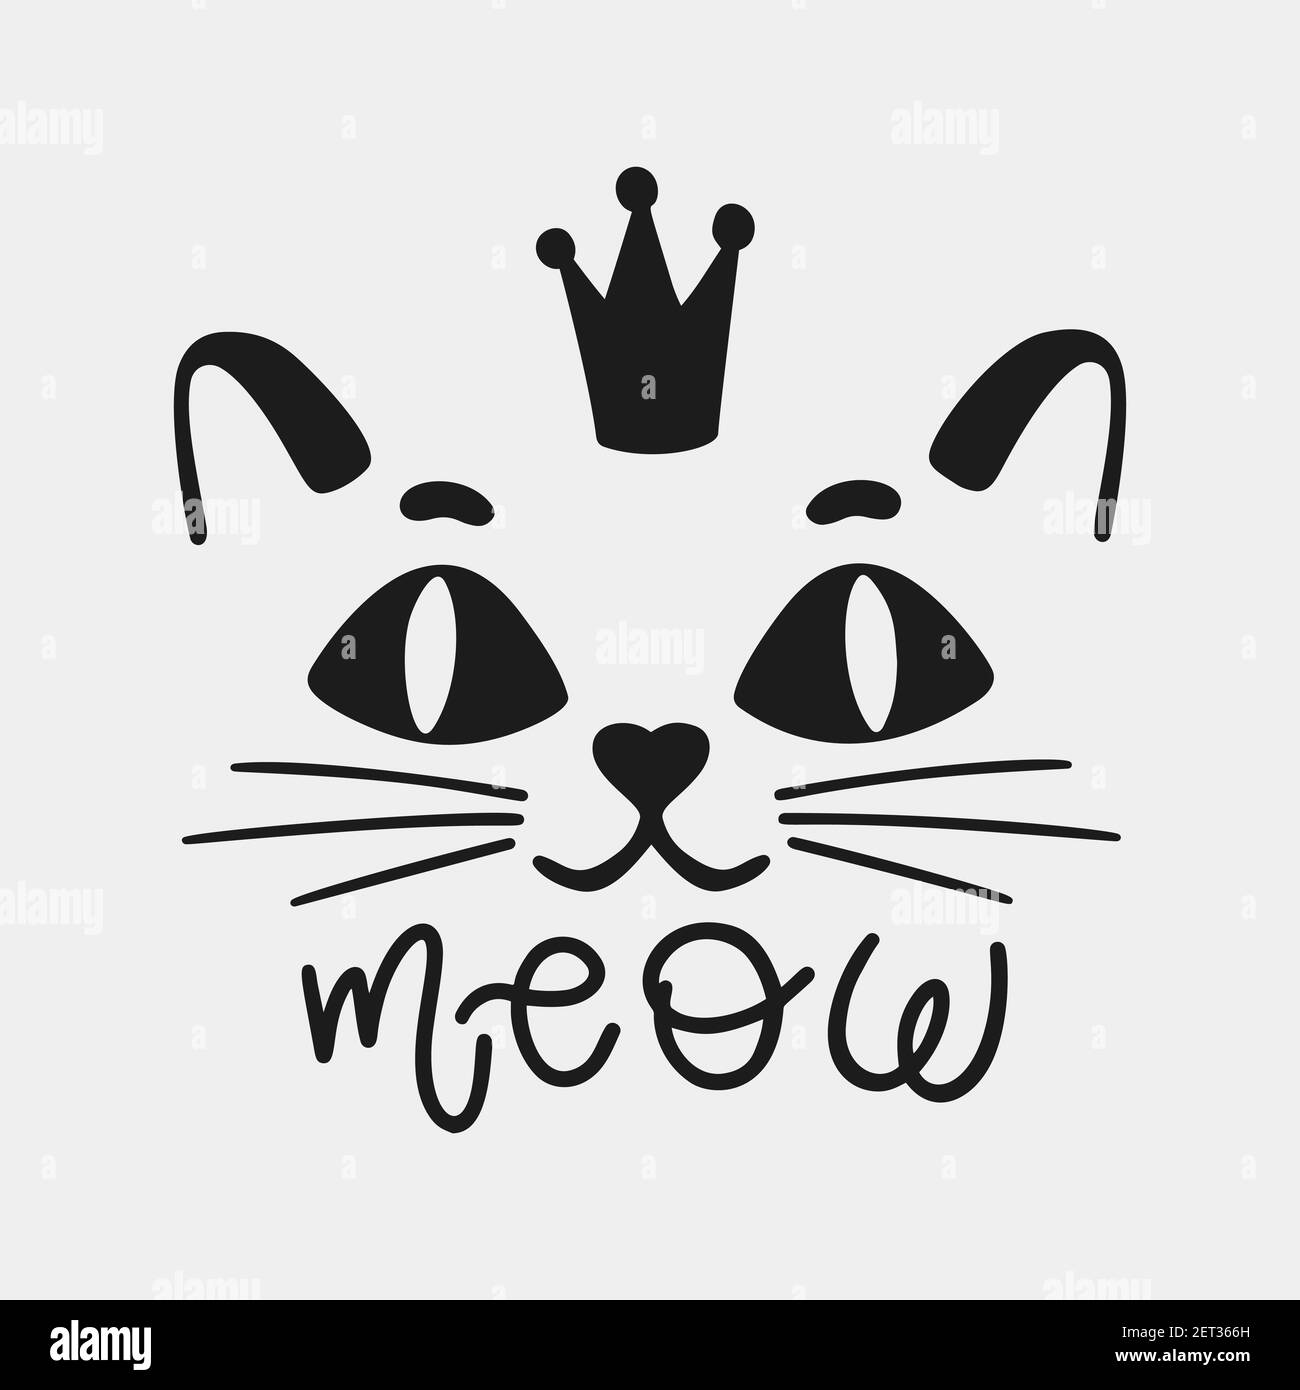 Logo cat Black and White Stock Photos & Images - Alamy